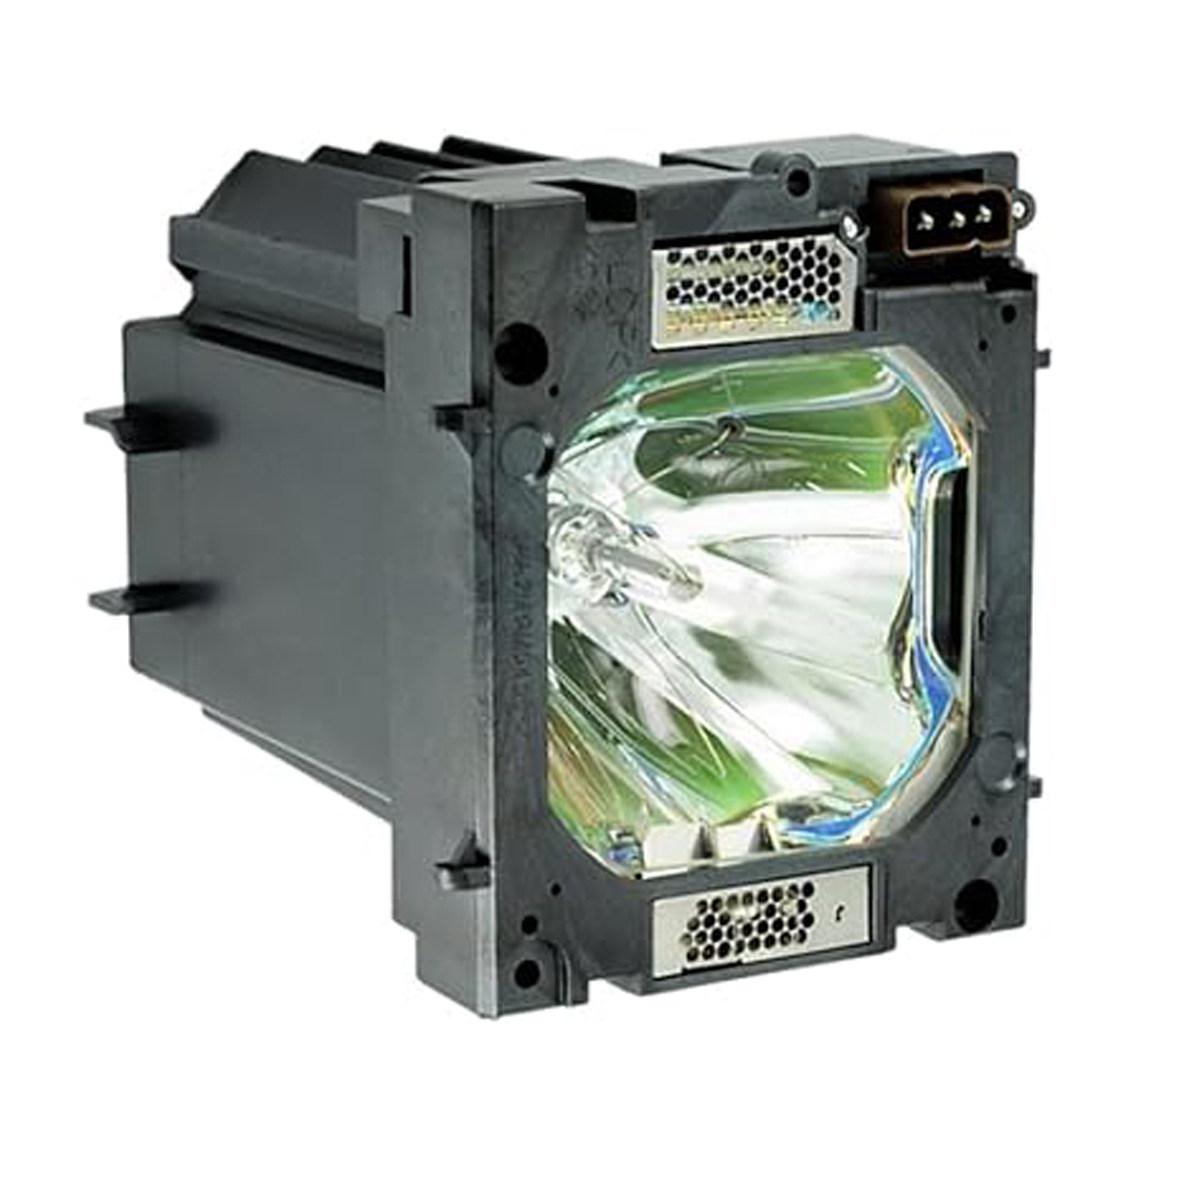 Replacement Projector lamp POA-LMP108 For Sanyo PLC-XP100 PLC-XP100L